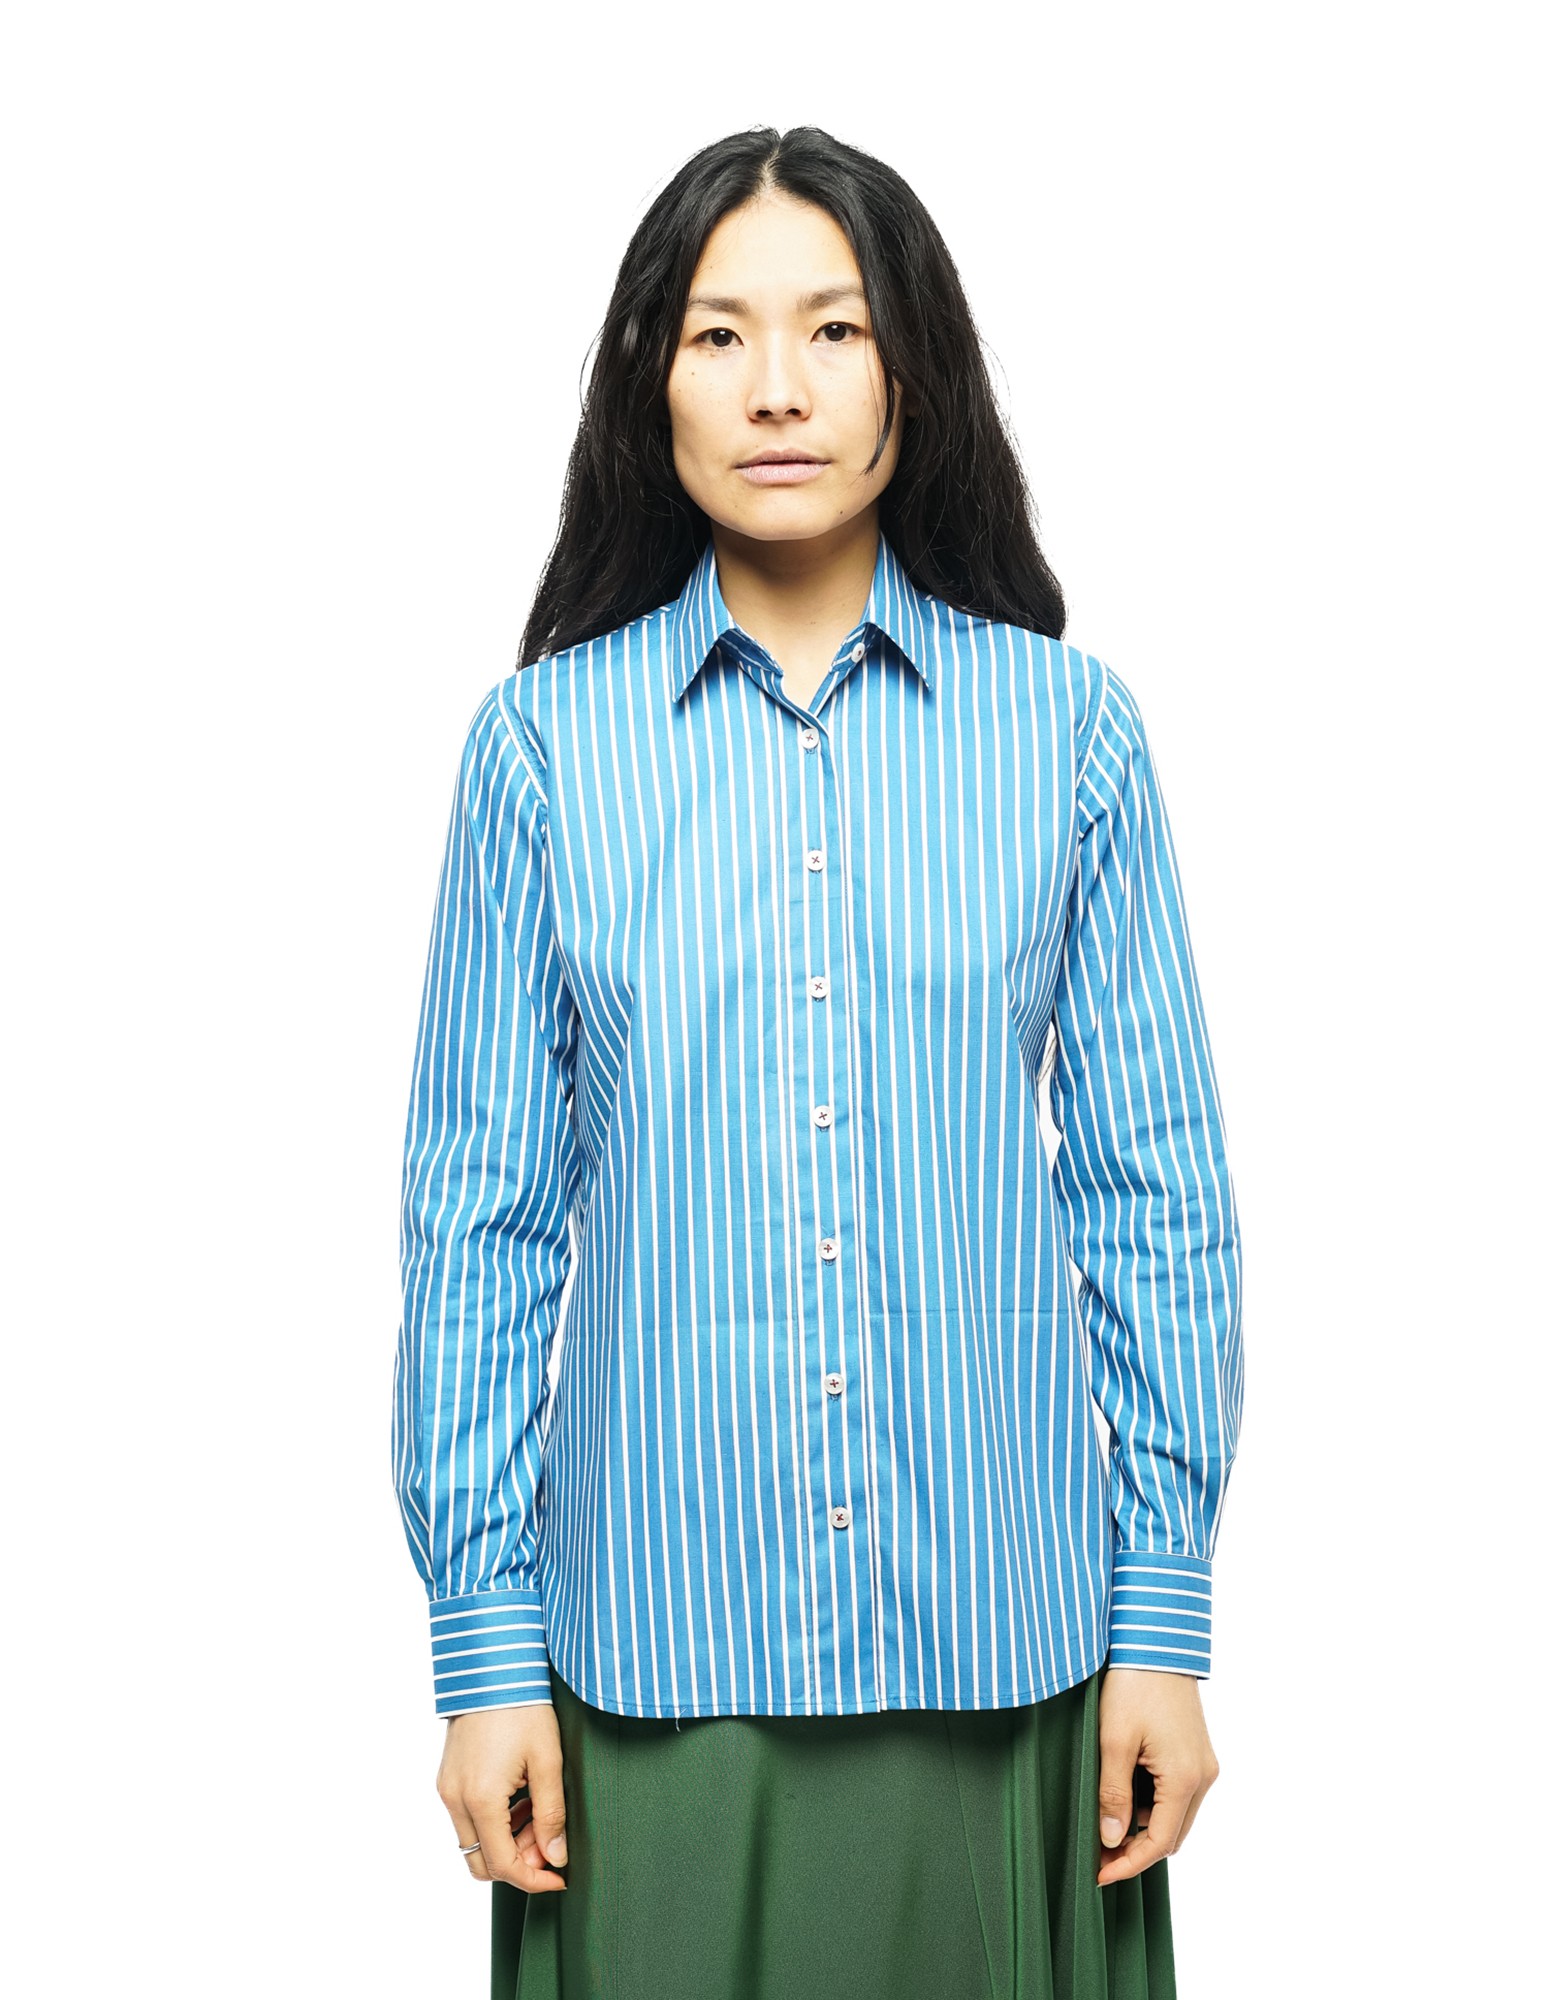 Shirt Nicole Ref 23.22.04 D - Bespoke stripes